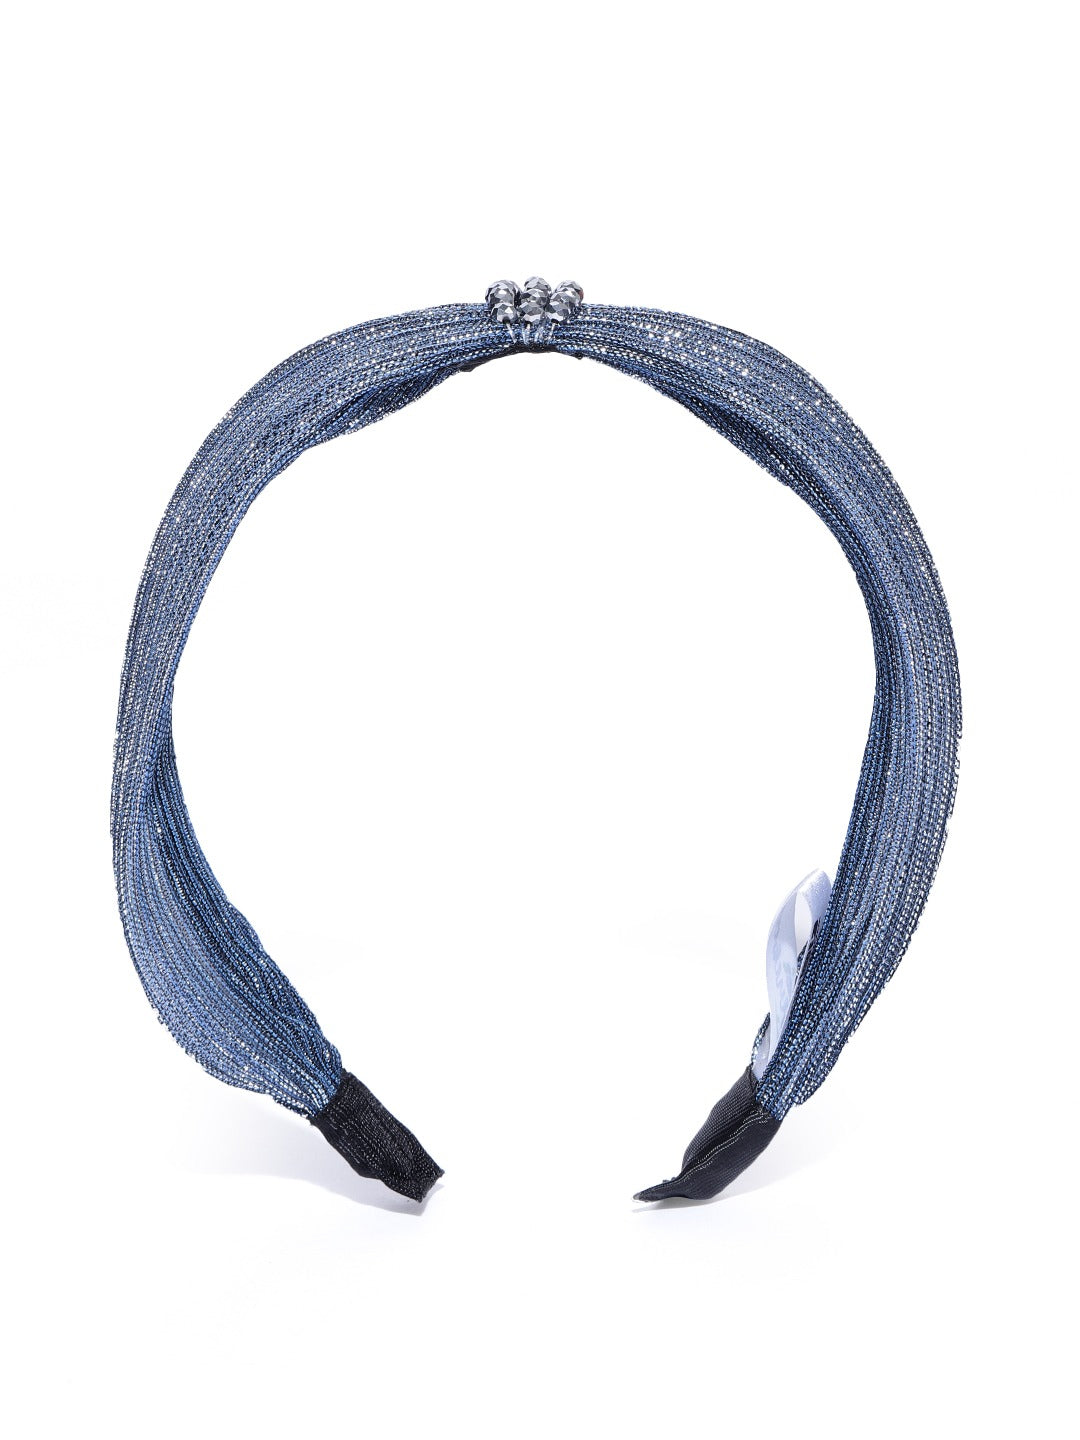 Blueberry blue simar fabric hair band